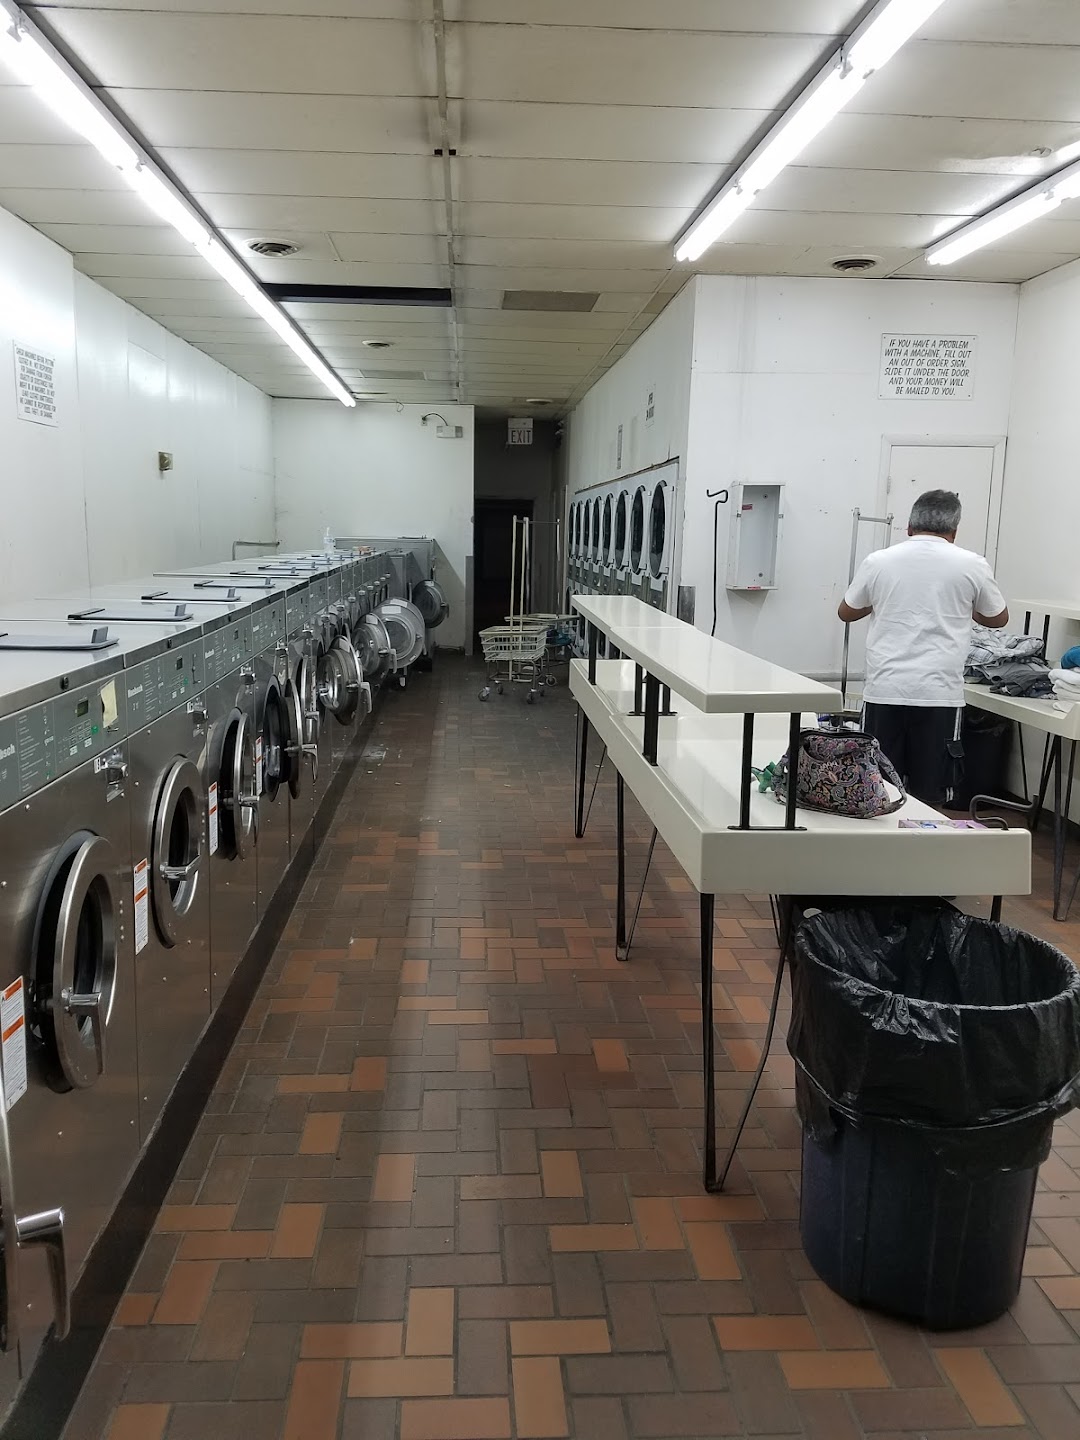 Brooklyn 24 Hour Laundromat